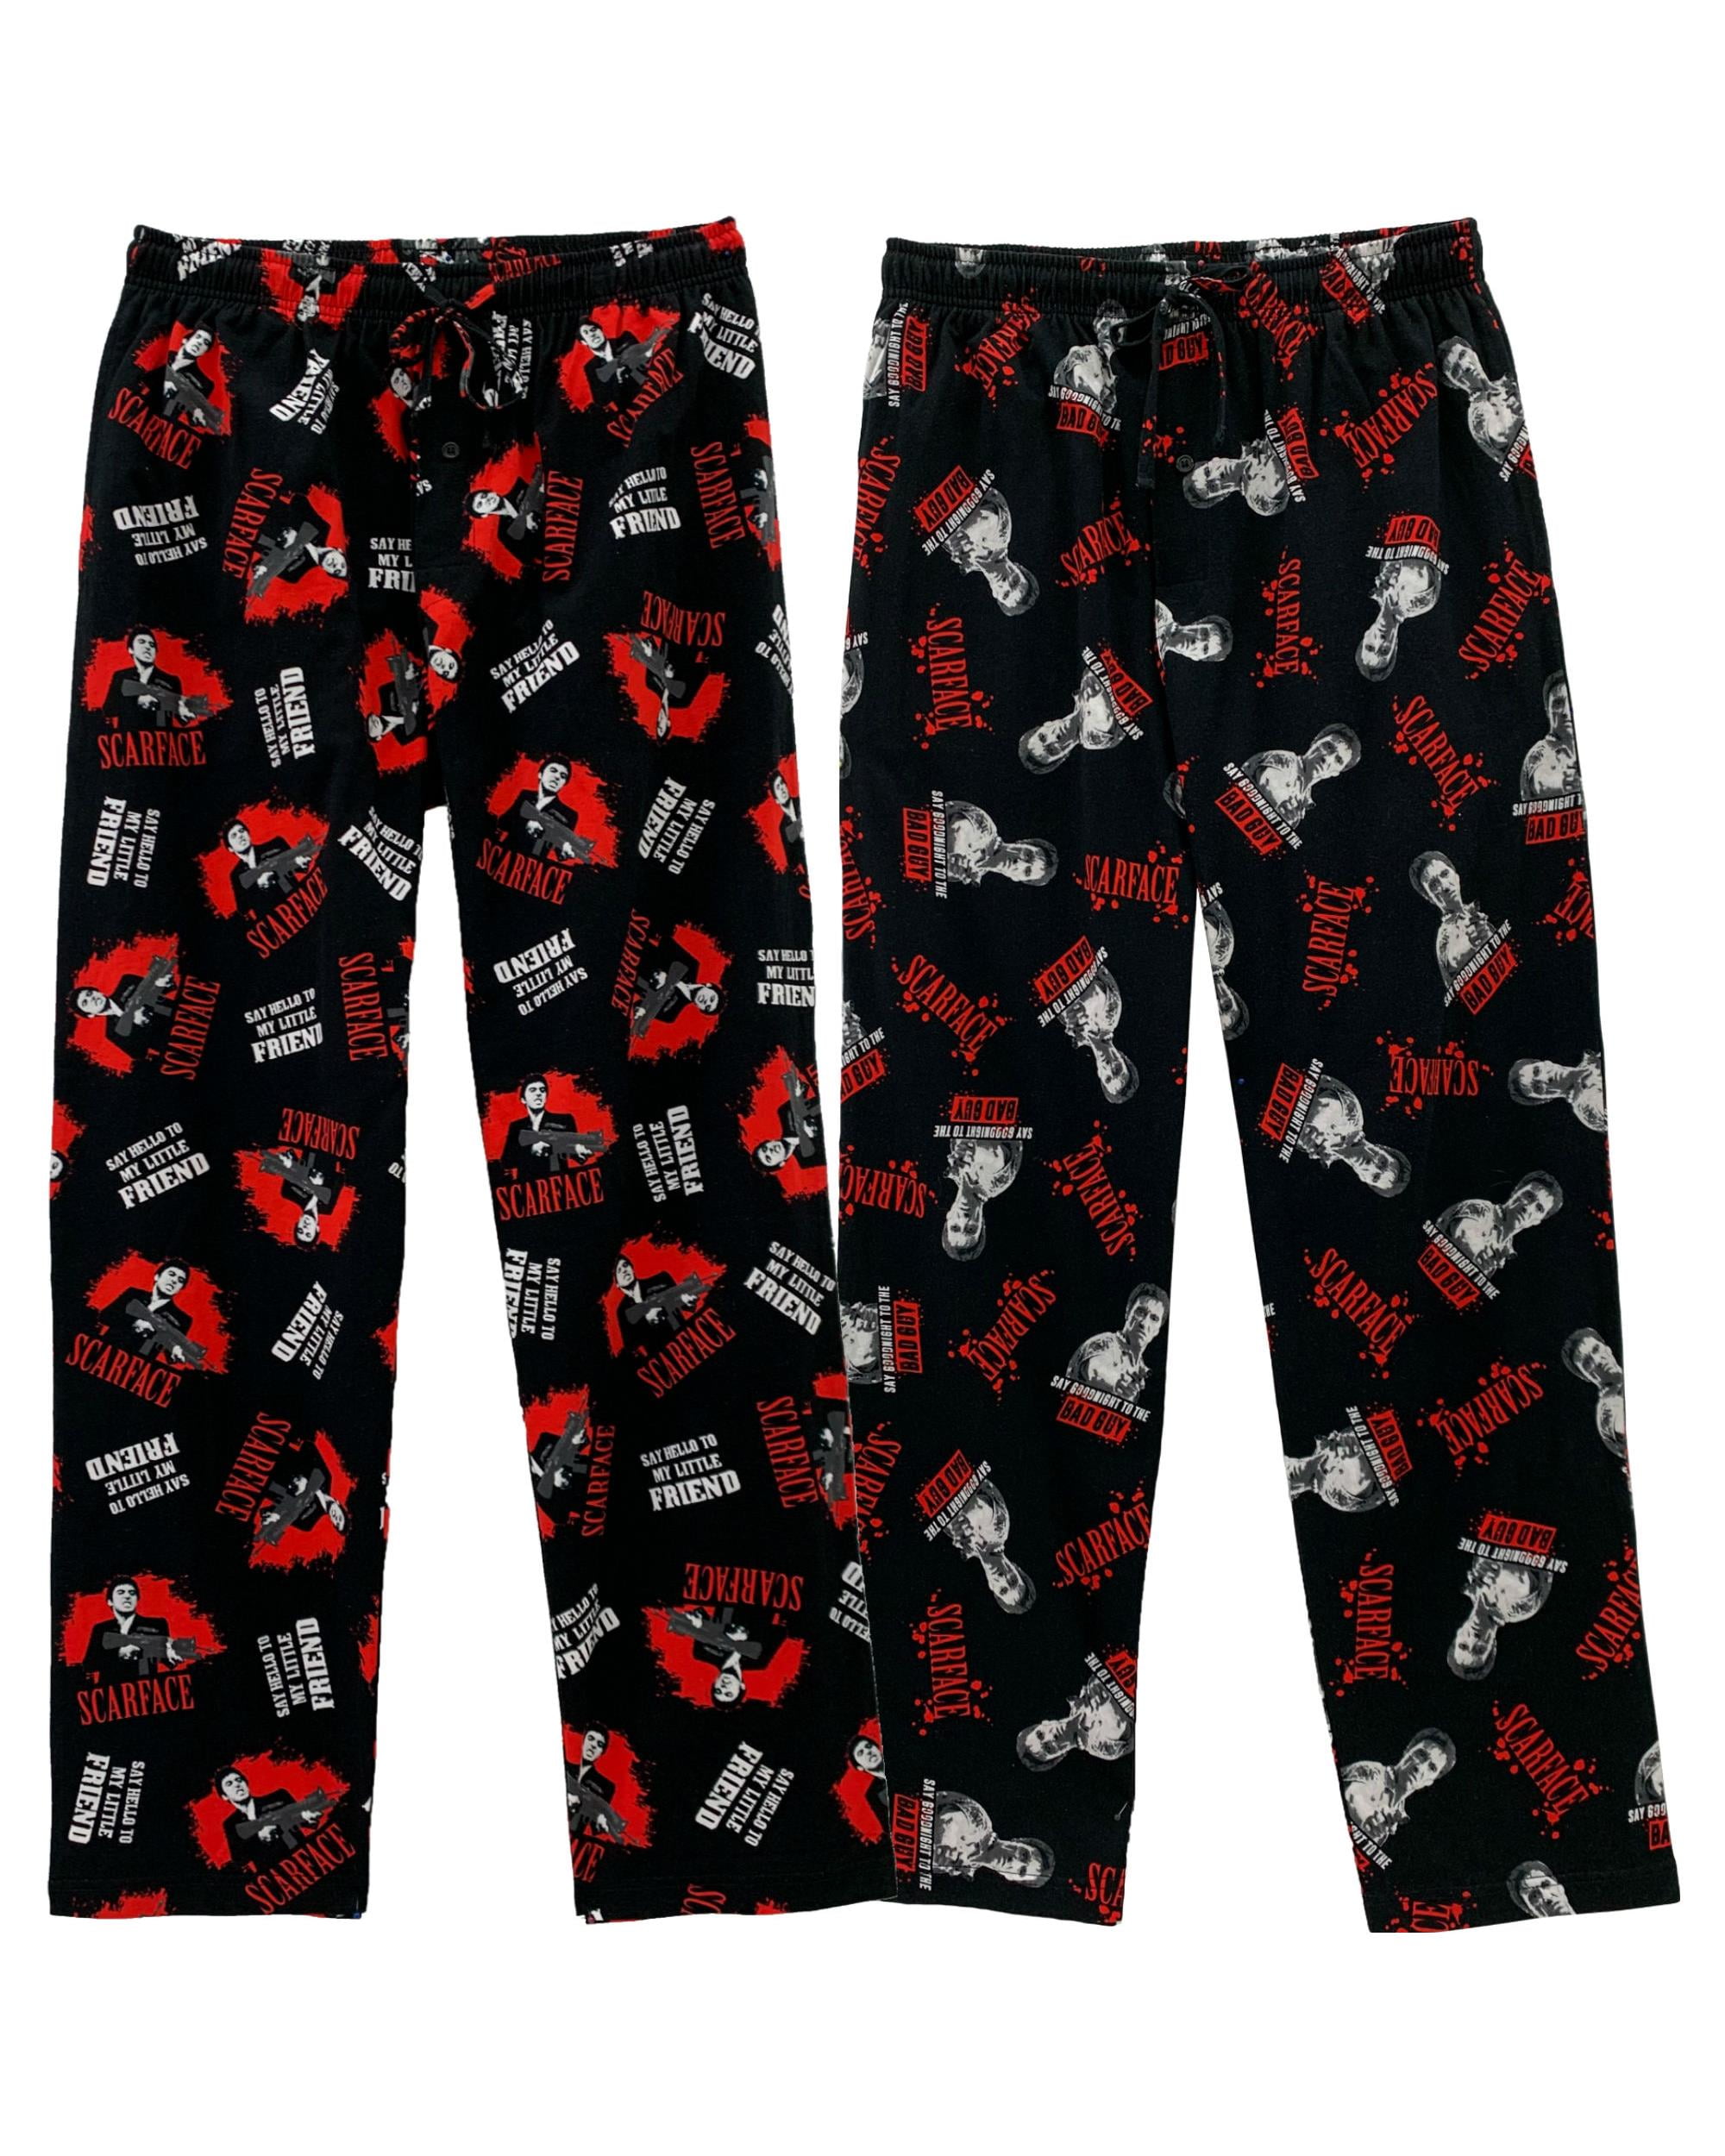 Details about   Scarface Tony Montana Shirt & Shorts Set Mens Sleepwear Loungewear Lounge PJ L